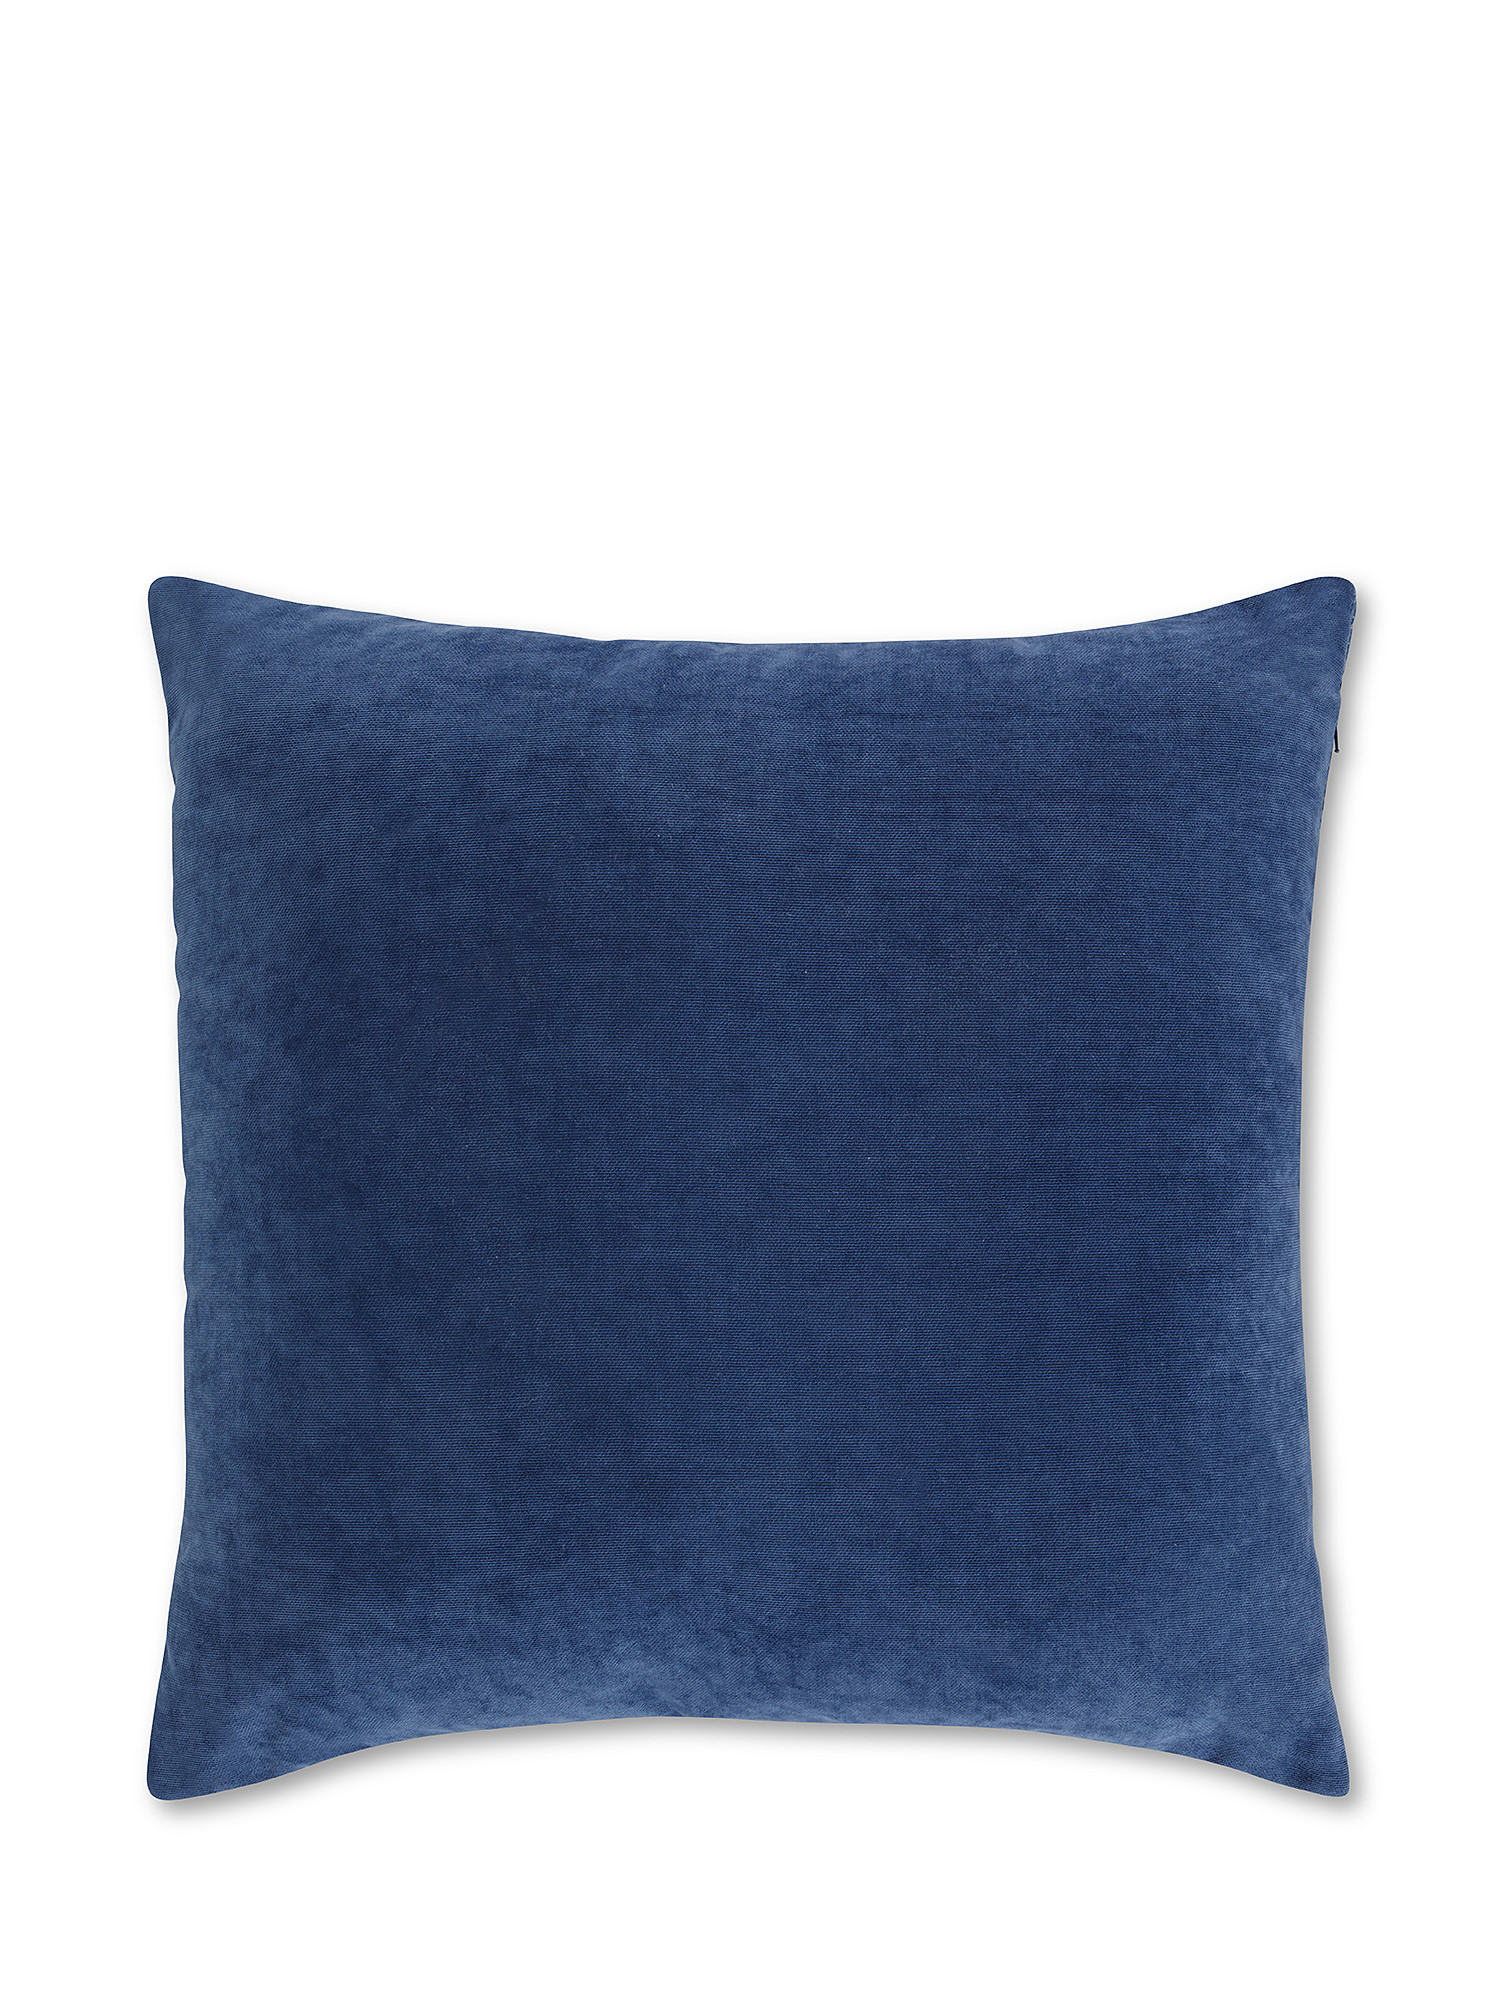 Jacquard cushion with zigzag motif 45x45cm, Blue, large image number 1